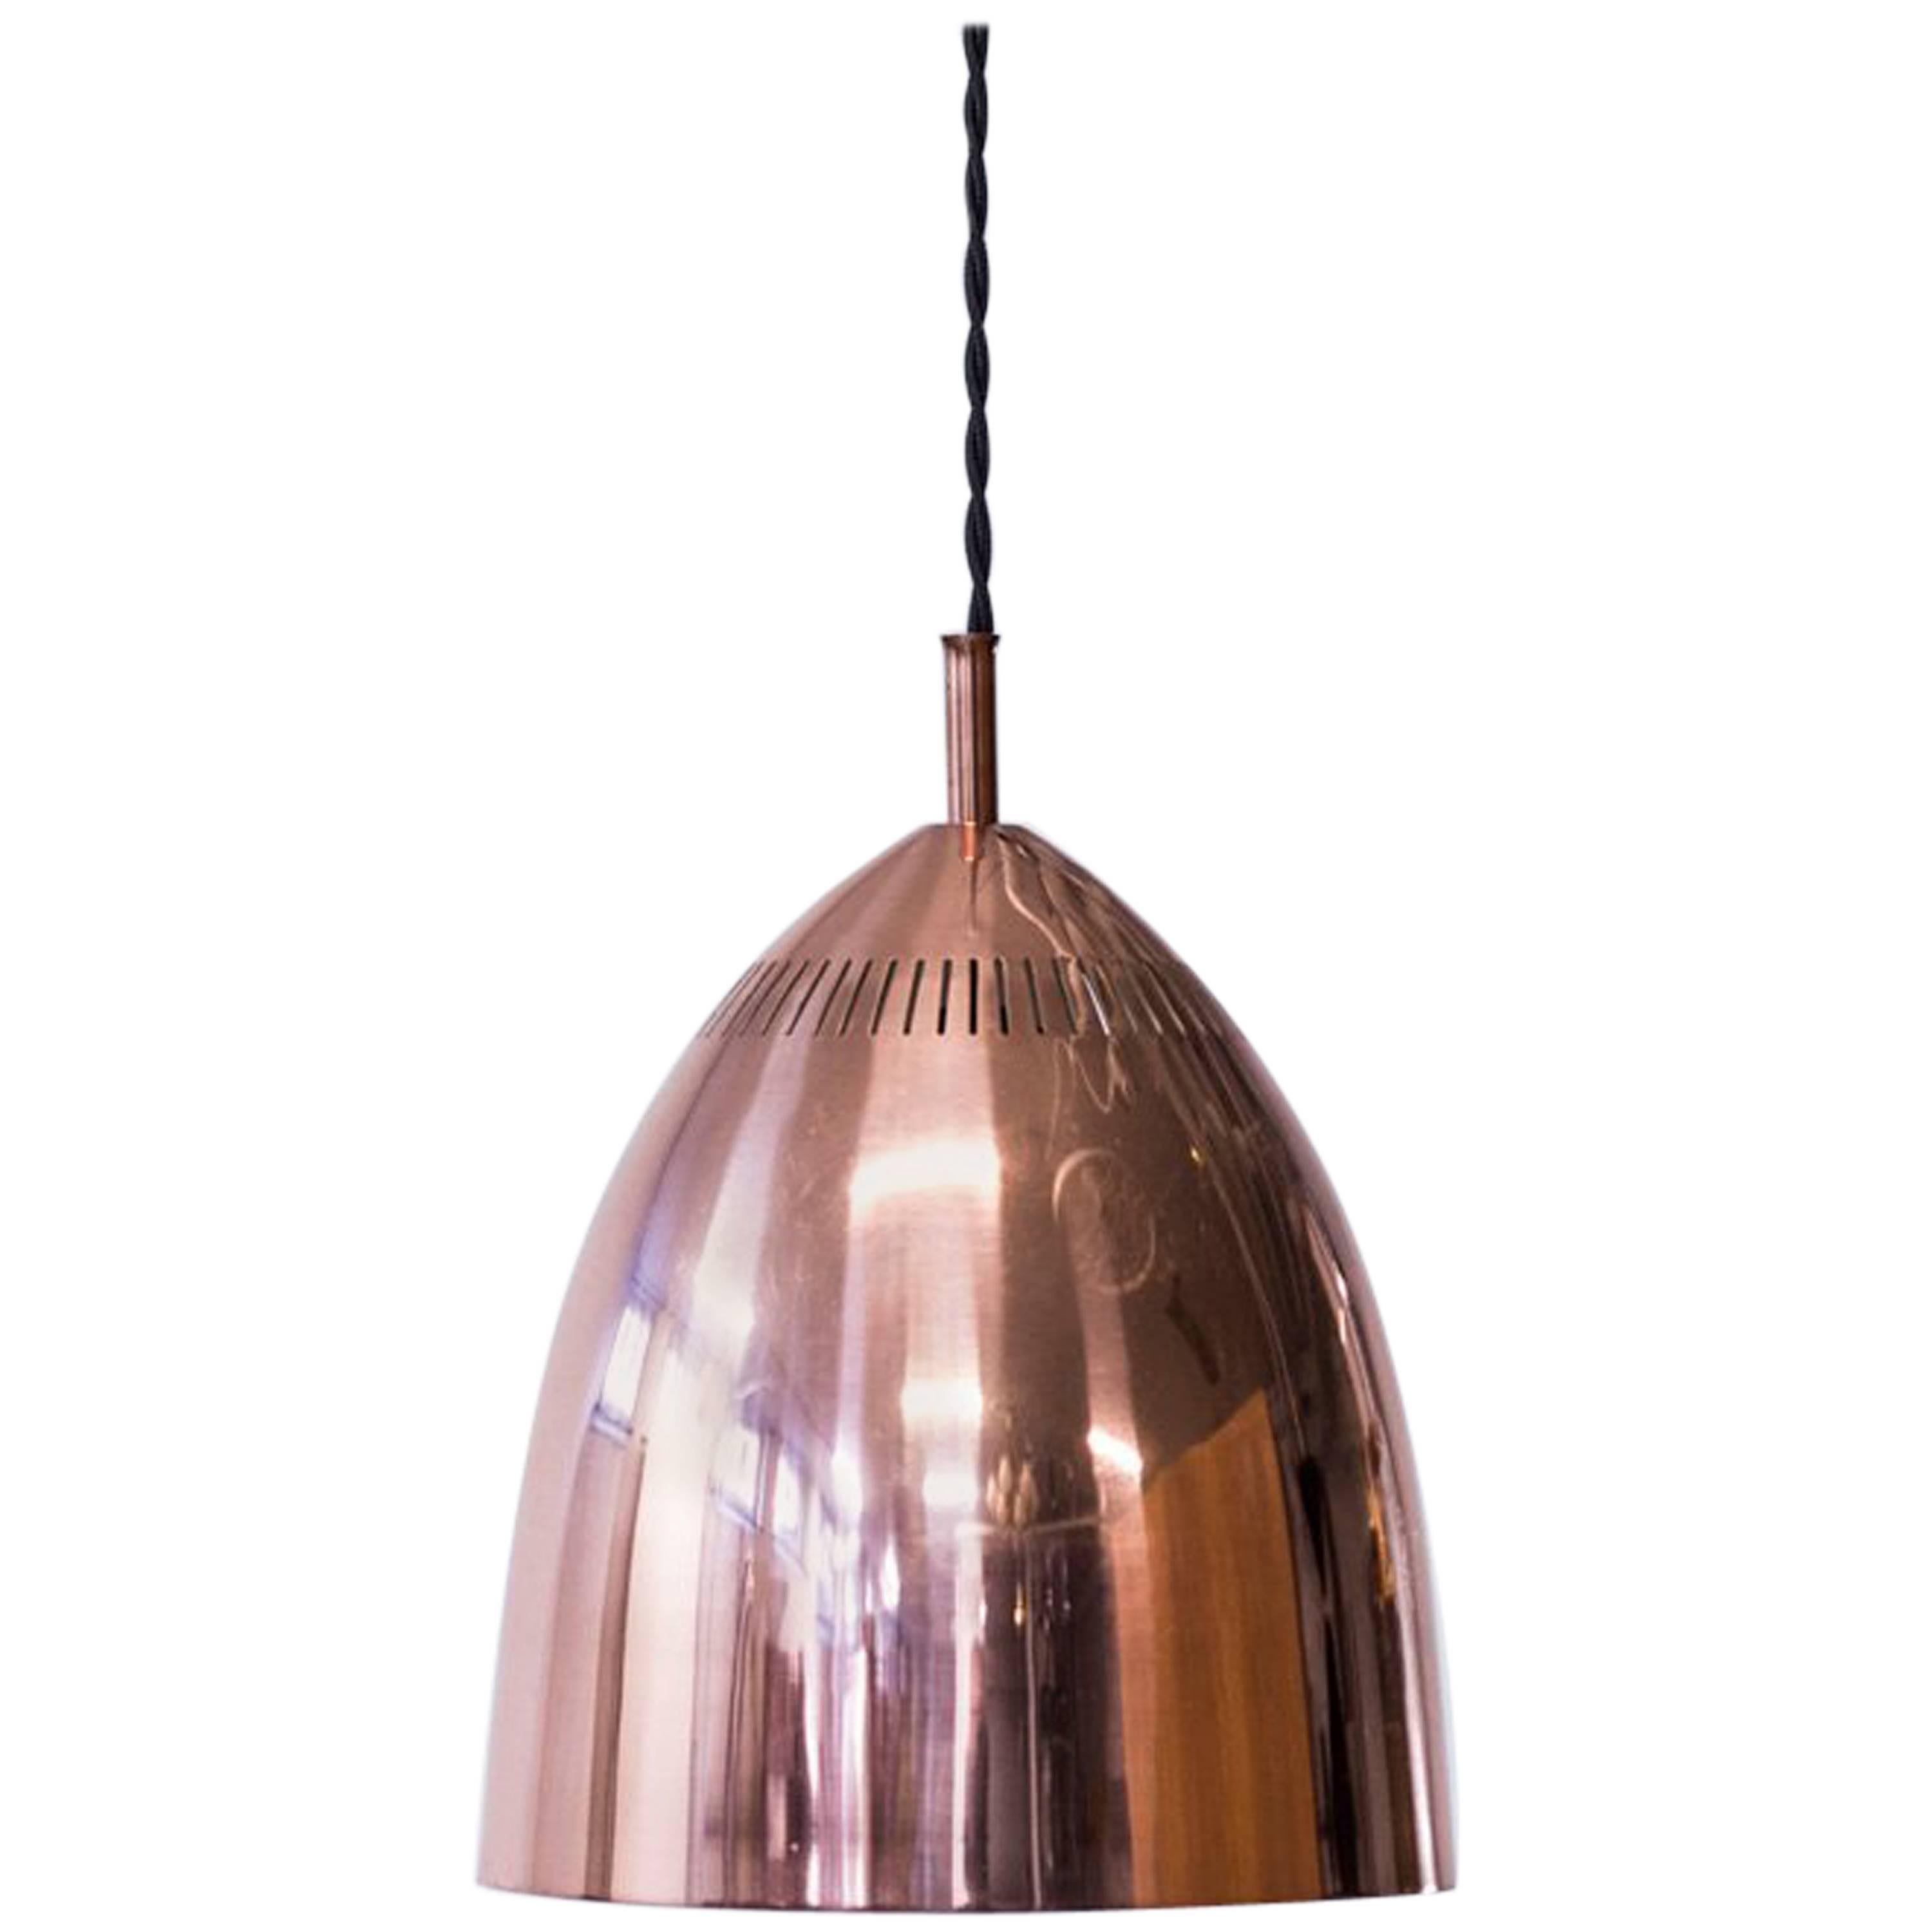 1960s Copper Pendant Lamp by ASEA, Sweden